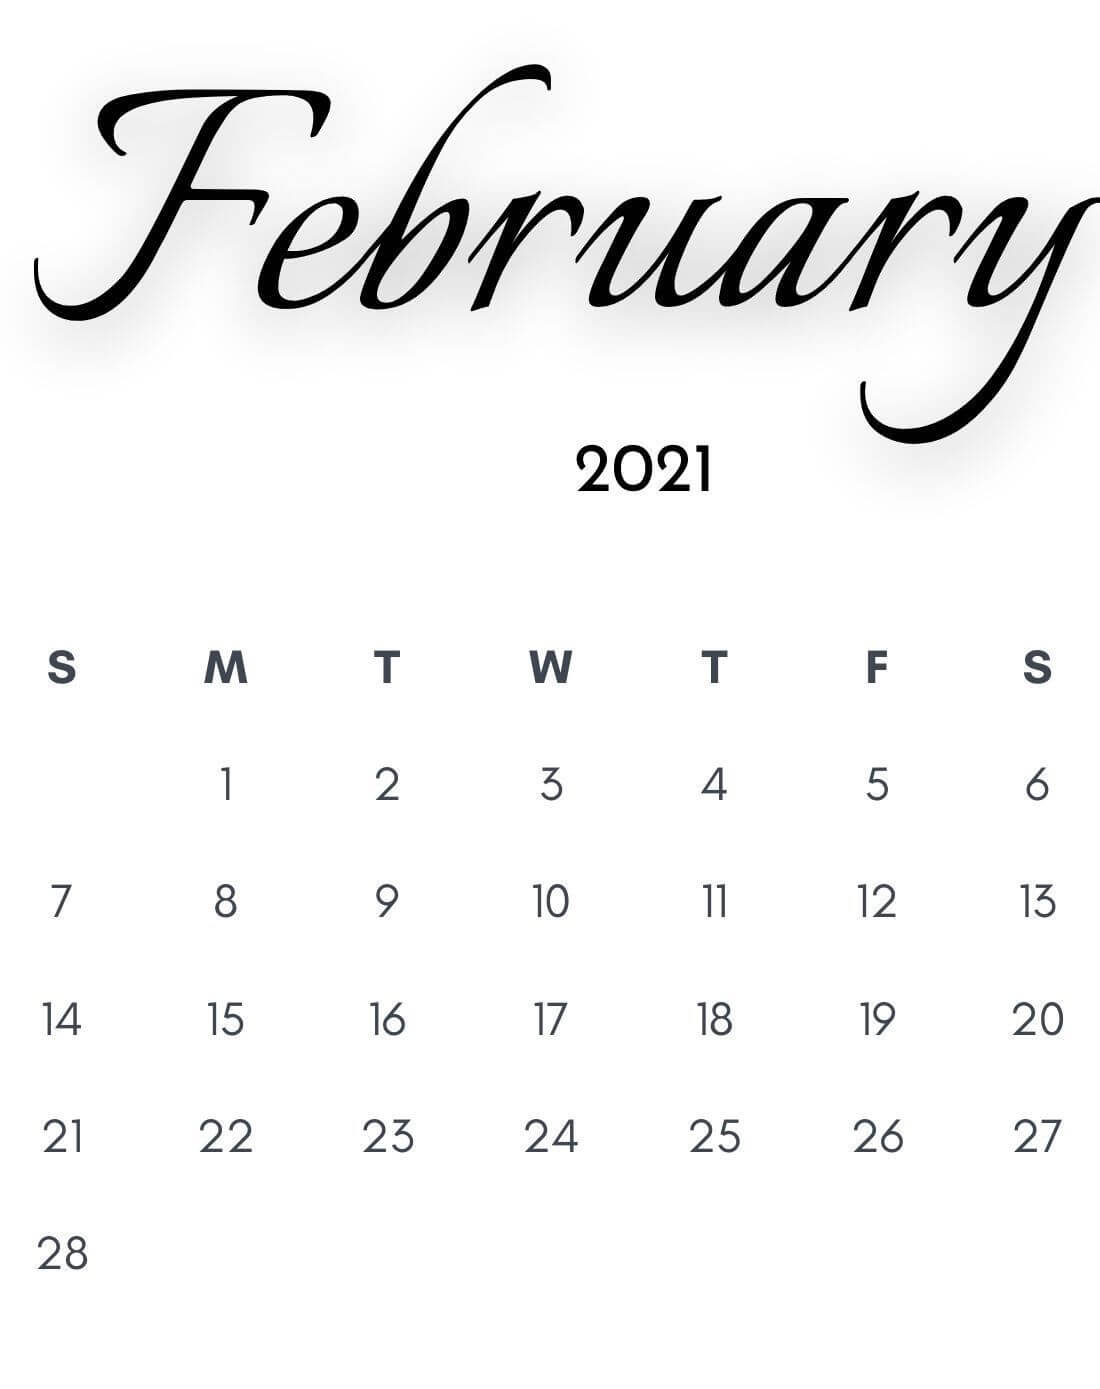 February 2020 Calendar Wallpaper For iPhone